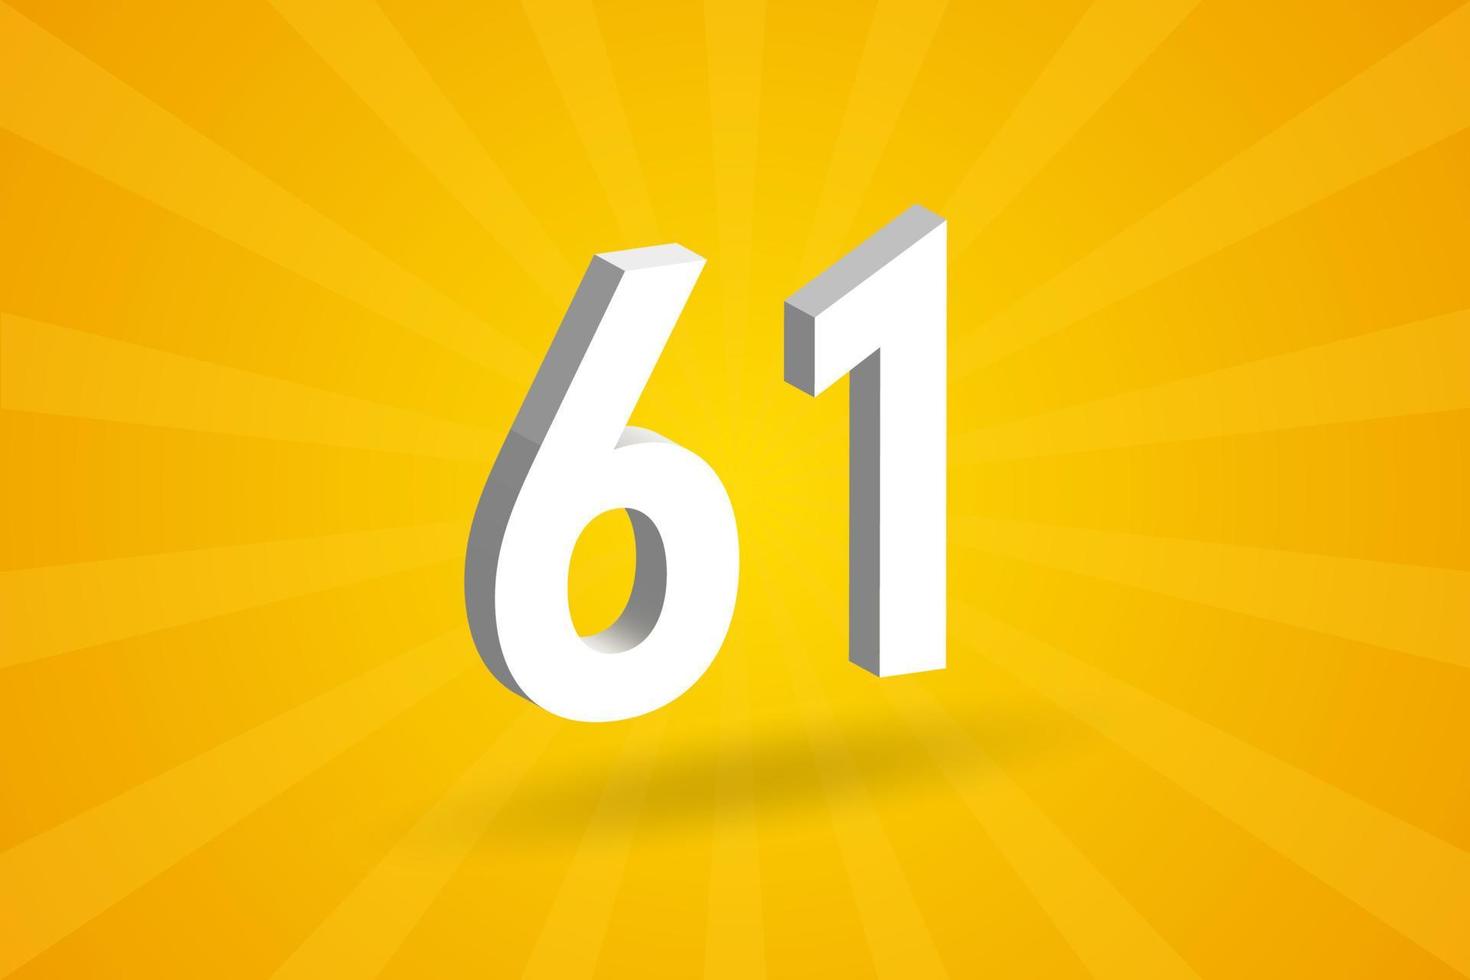 3d 61 siffra font alfabet. vit 3d siffra 61 med gul bakgrund vektor